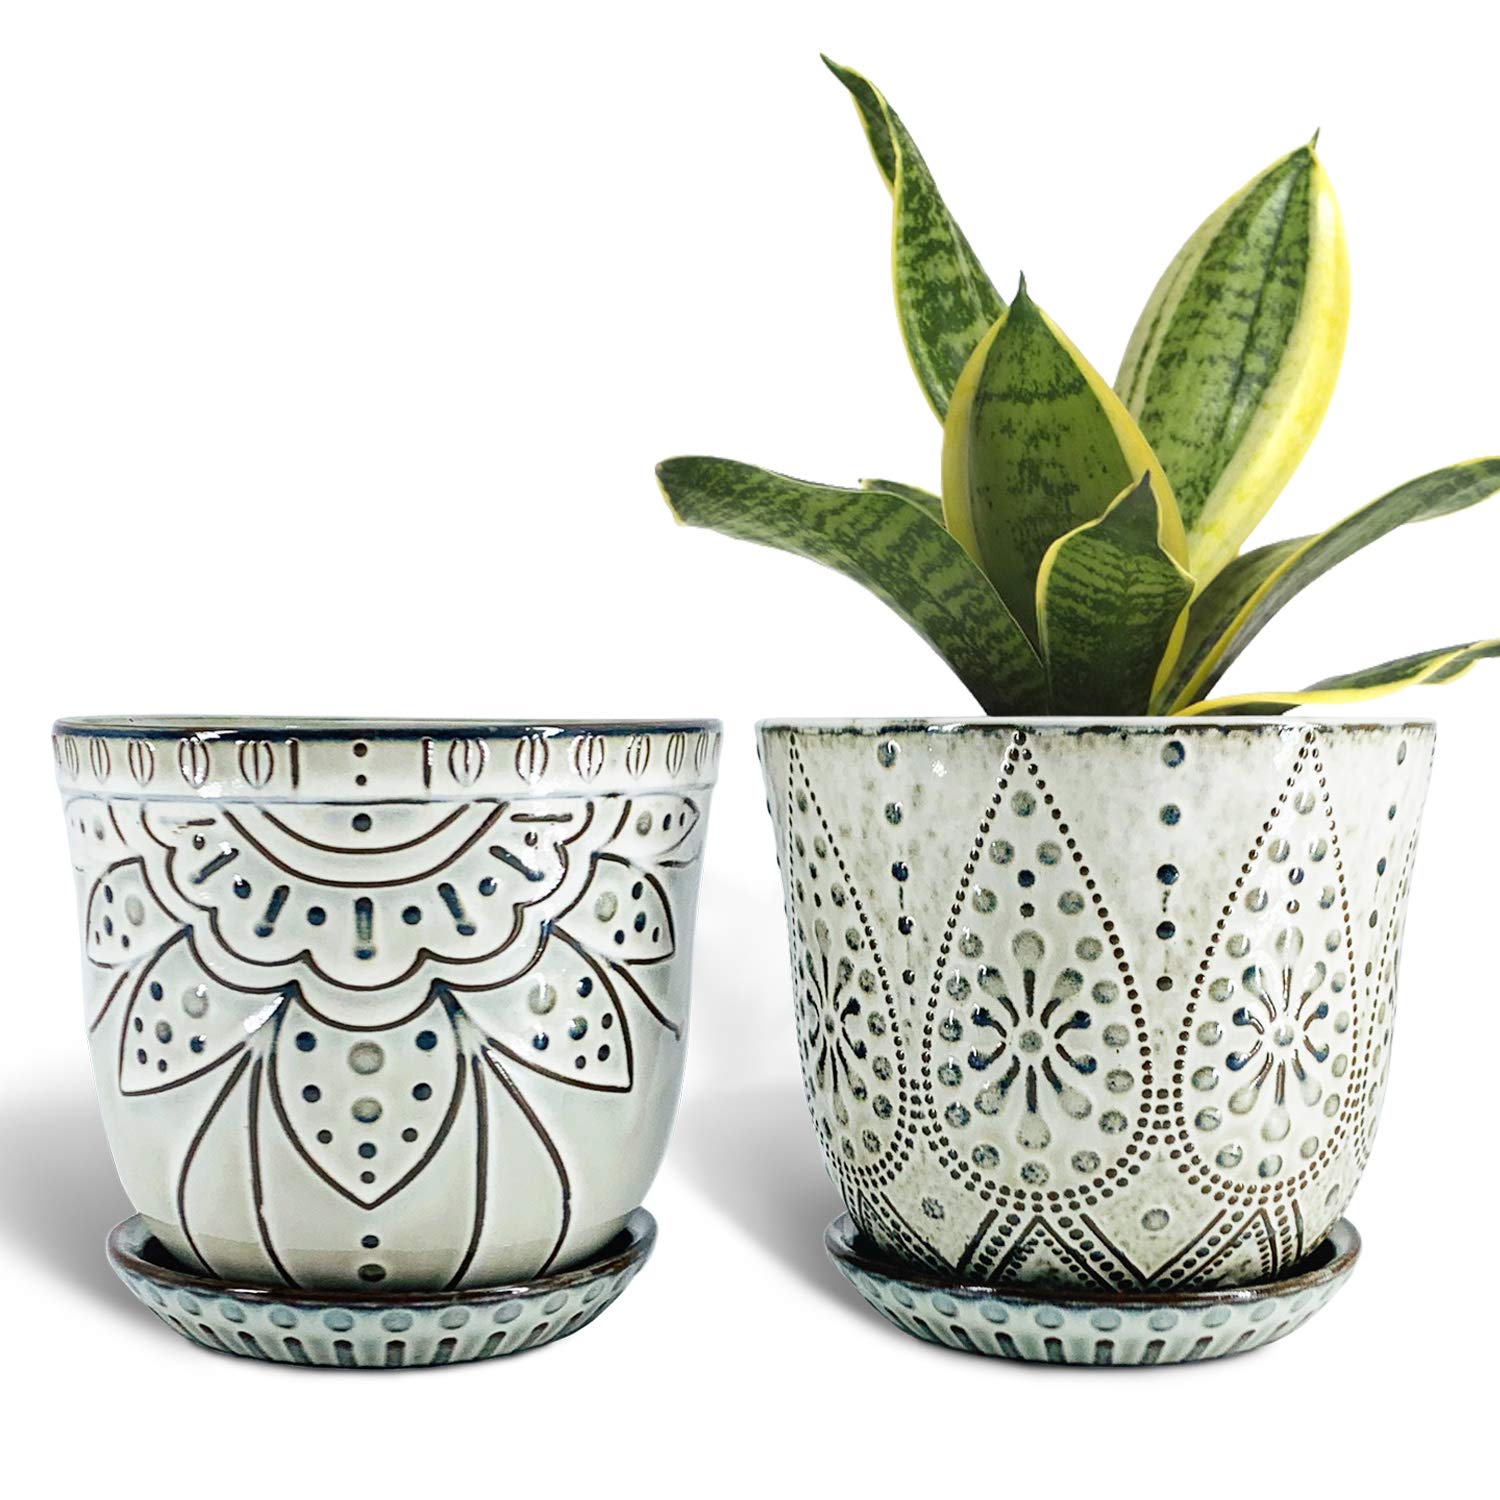 Pots For Orchid Plants